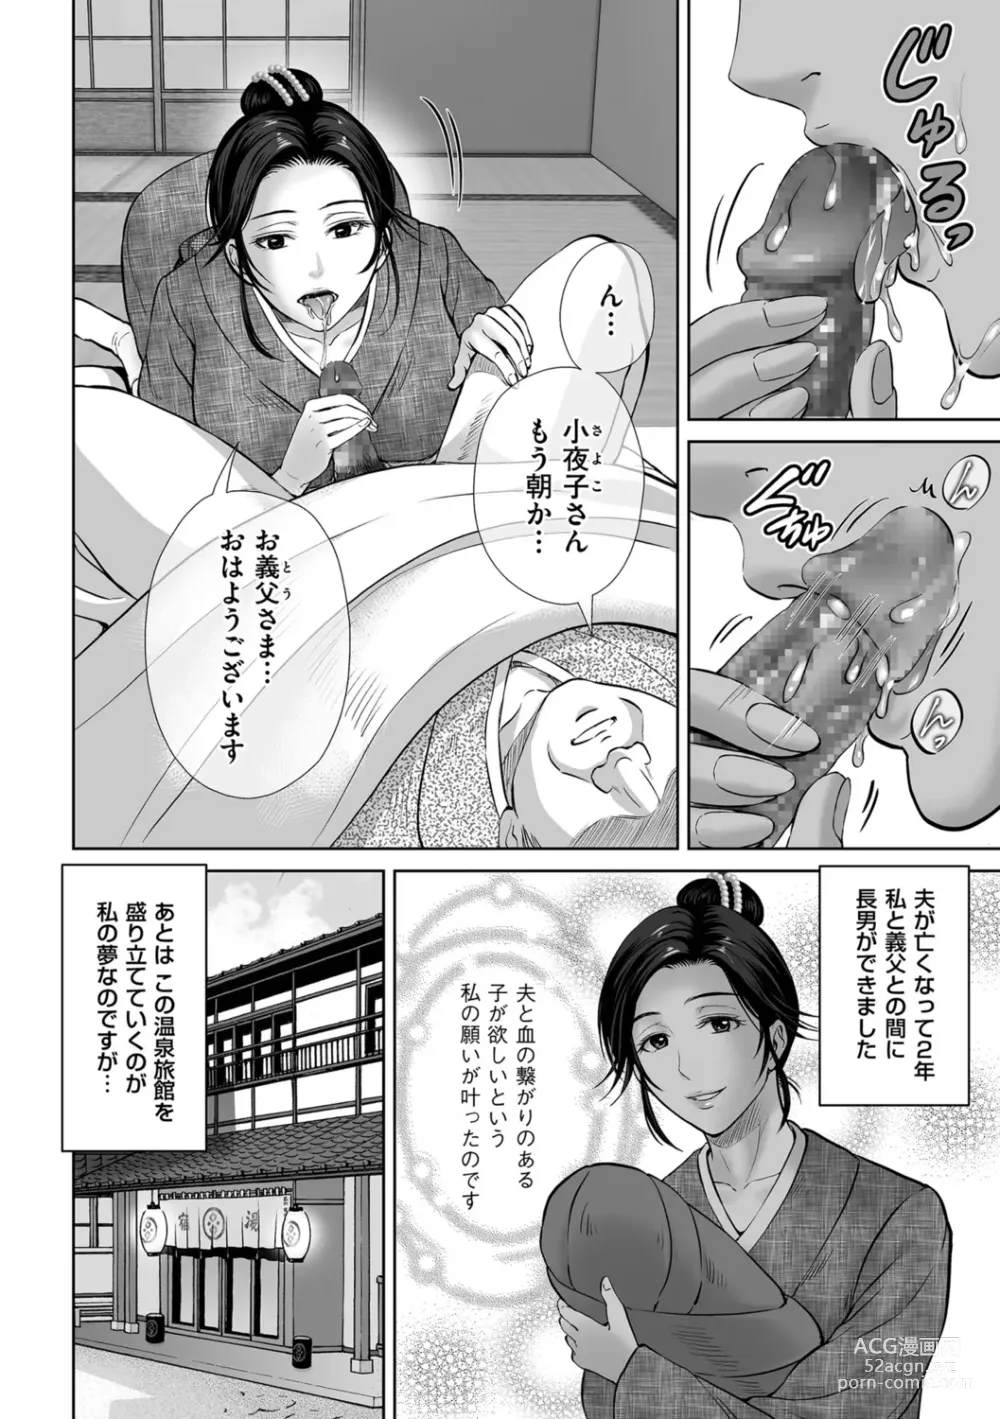 Page 174 of manga Mesuzakari no Haha-tachi e